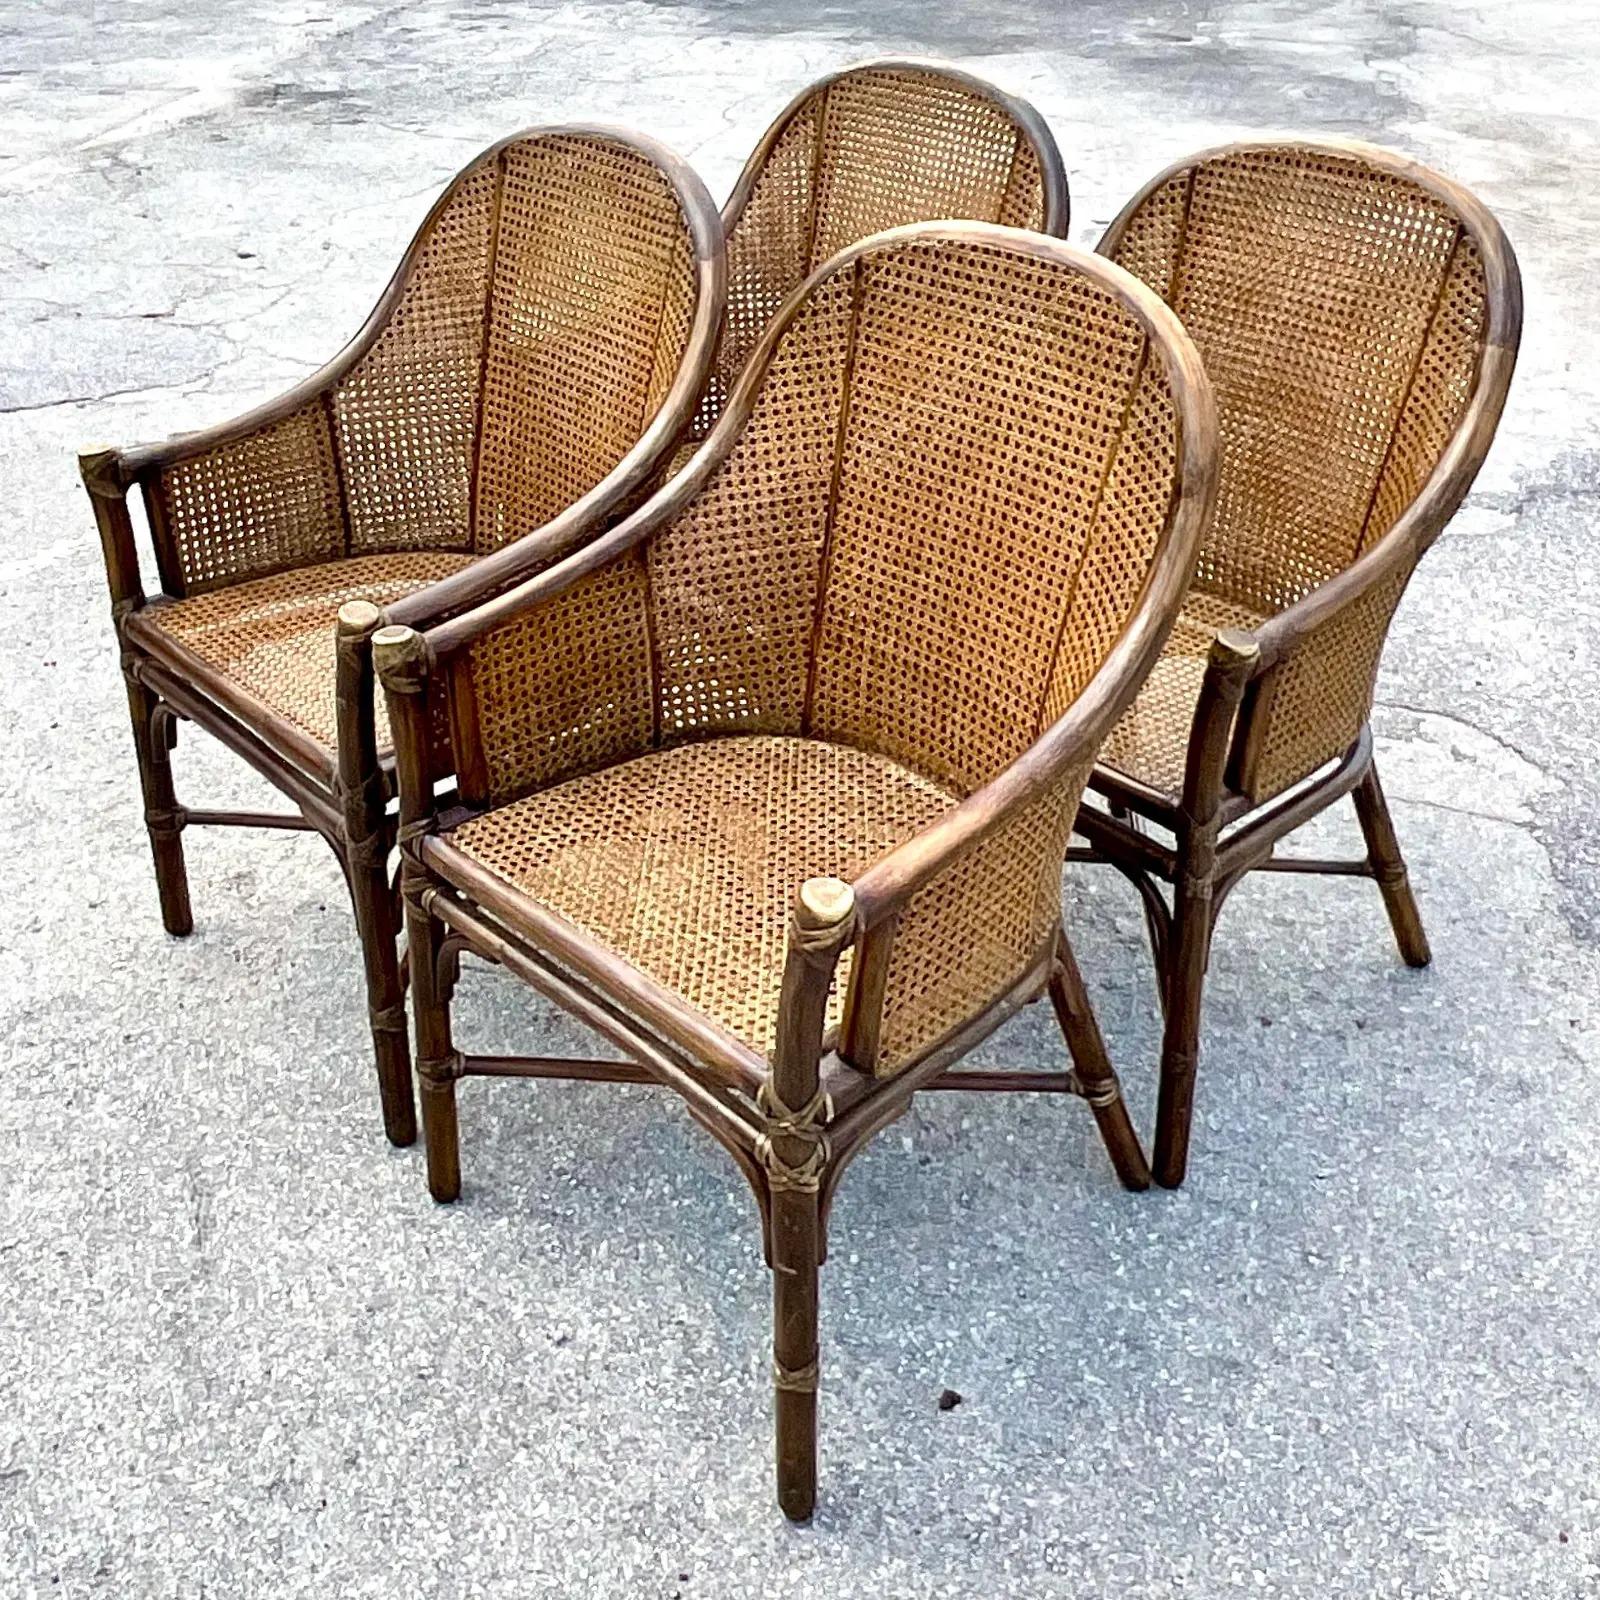 Philippine Vintage Coastal McGuire Belden Cane Dining Chairs, Set of 4